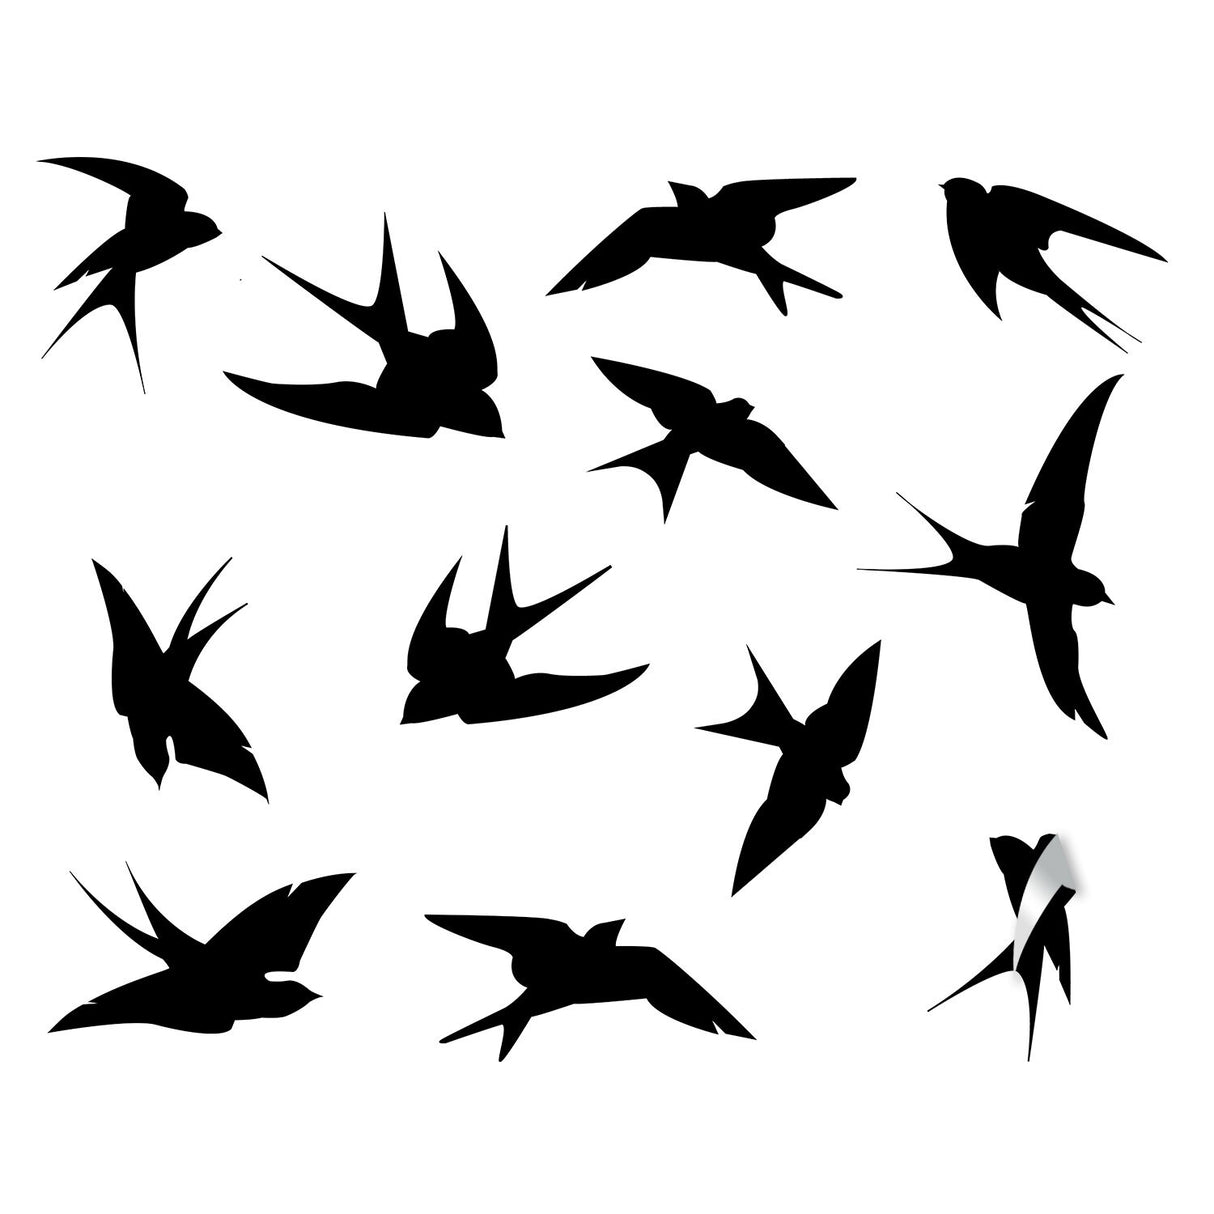 12x Flock Of Birds Wall Sticker - Vinyl Flying Decal Art Decor